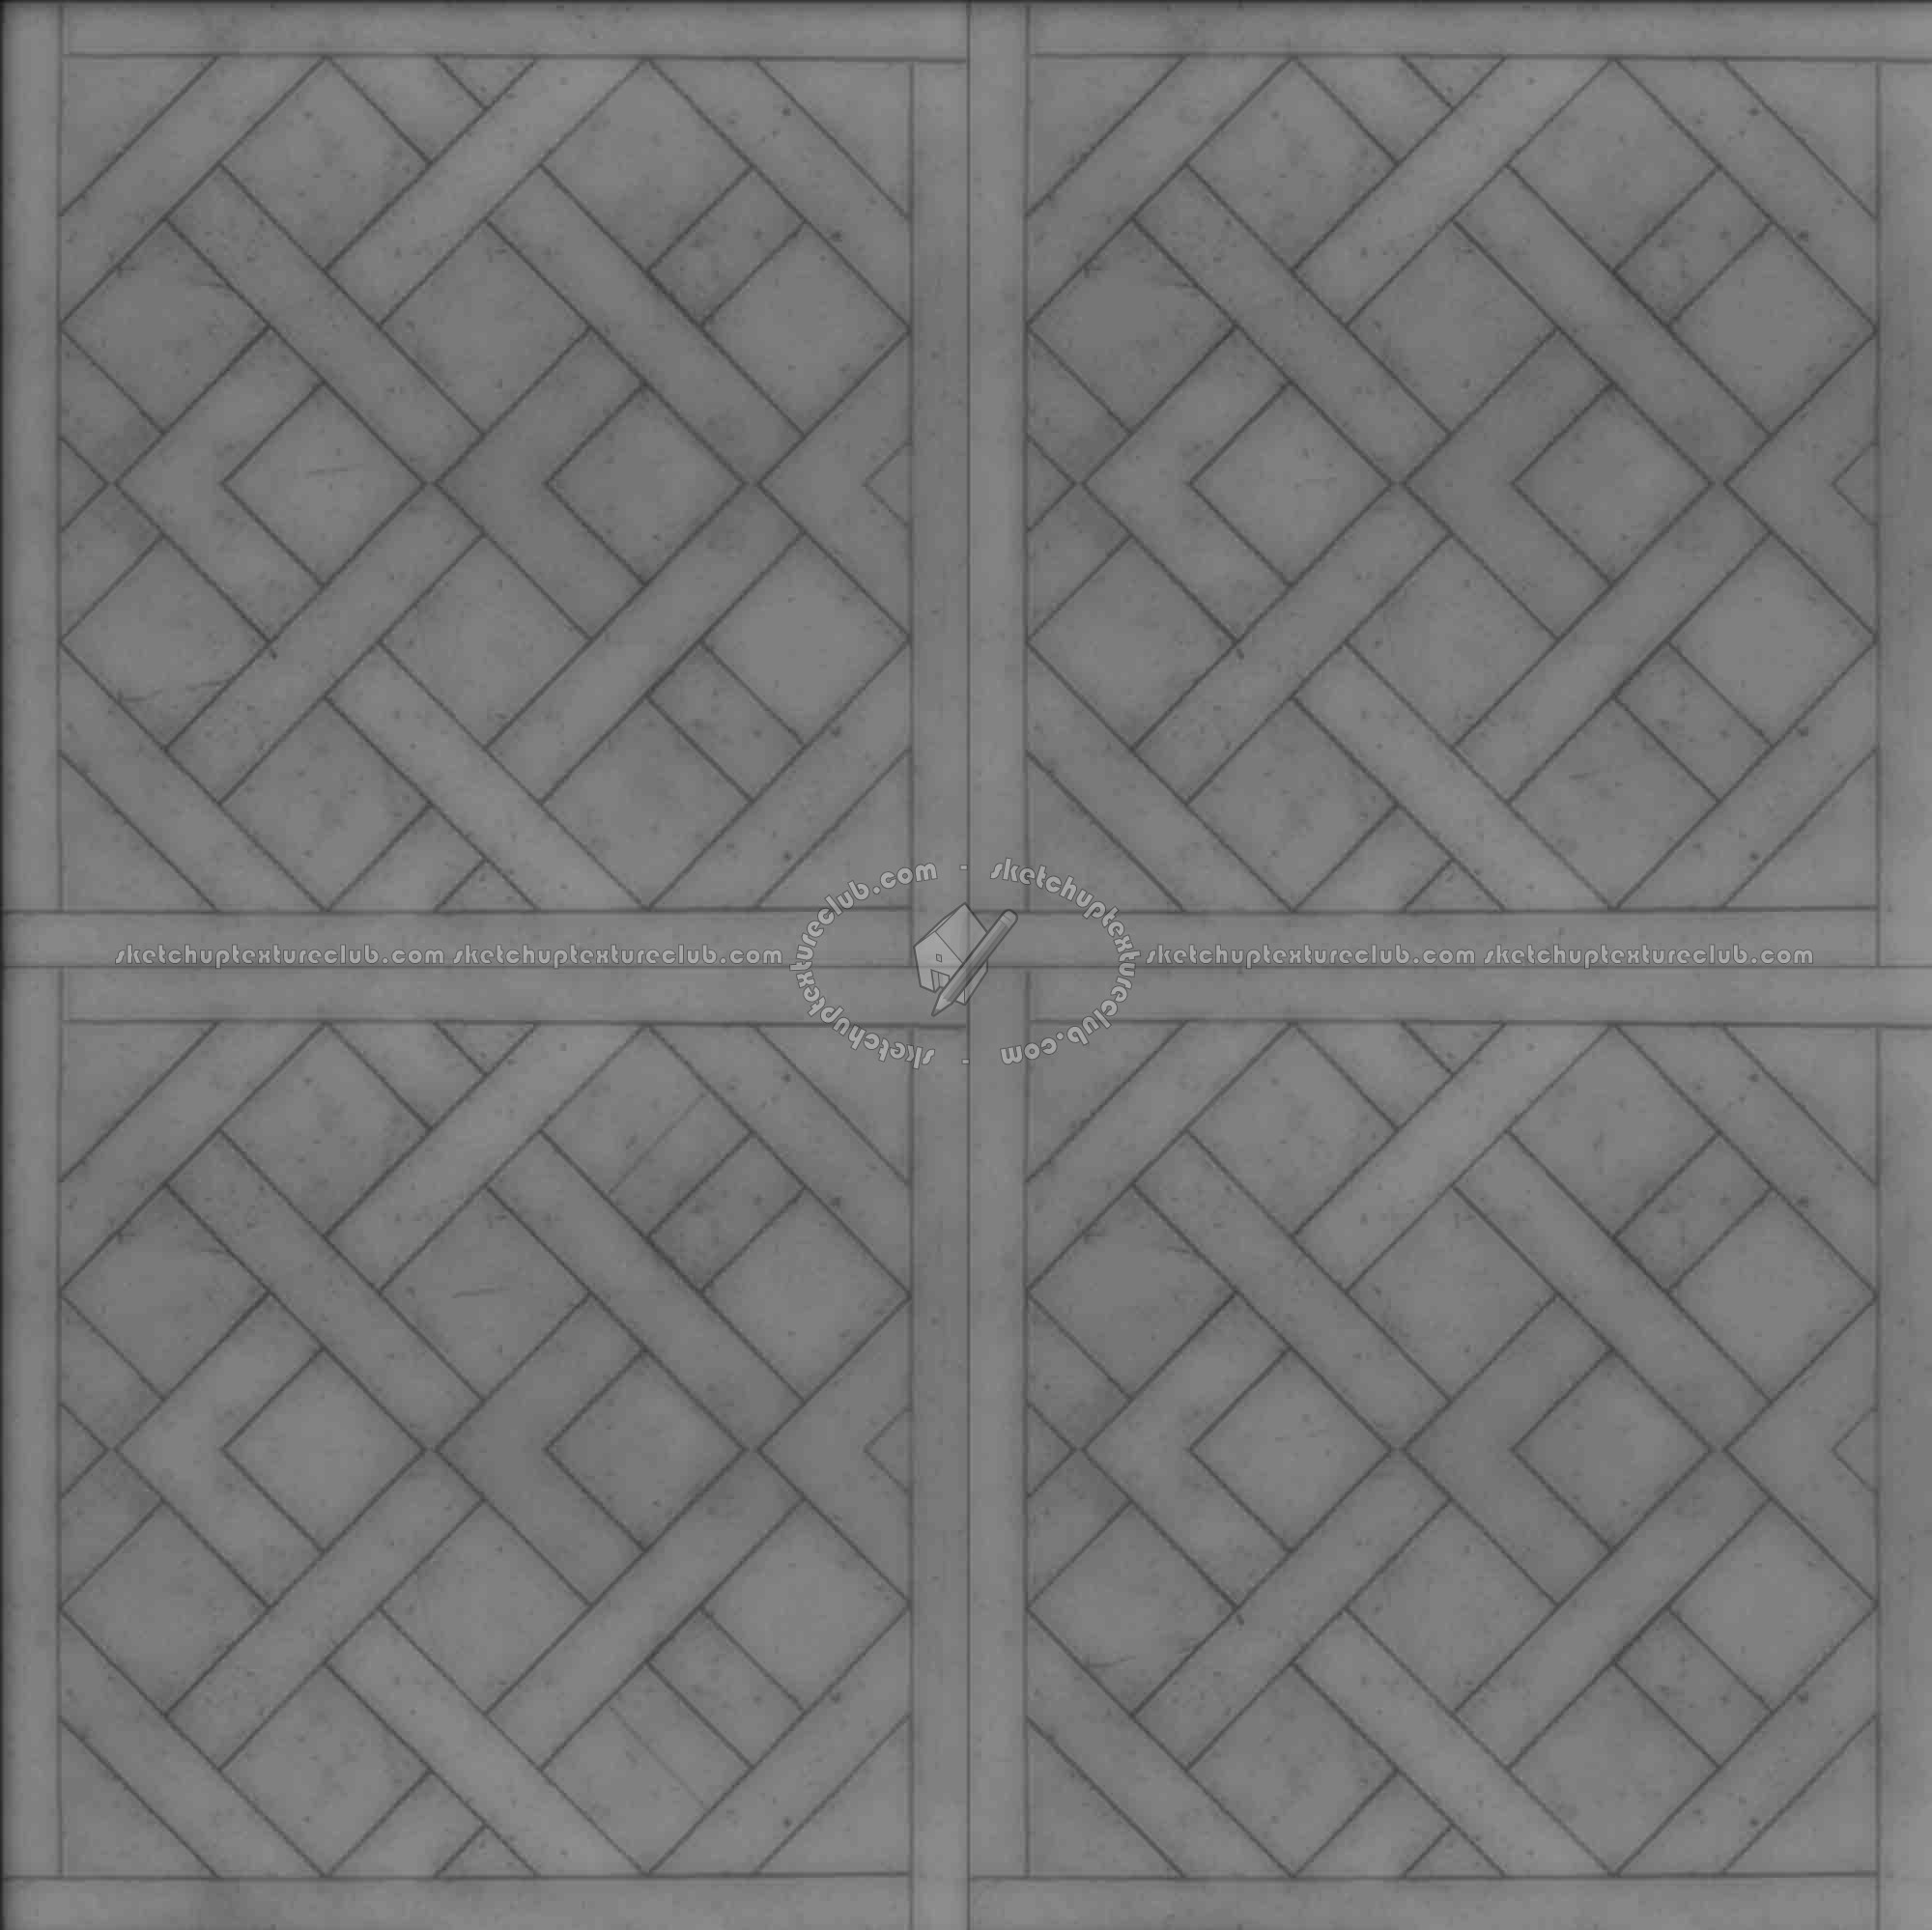 Versailles gezoet stone tile texture seamless 20549